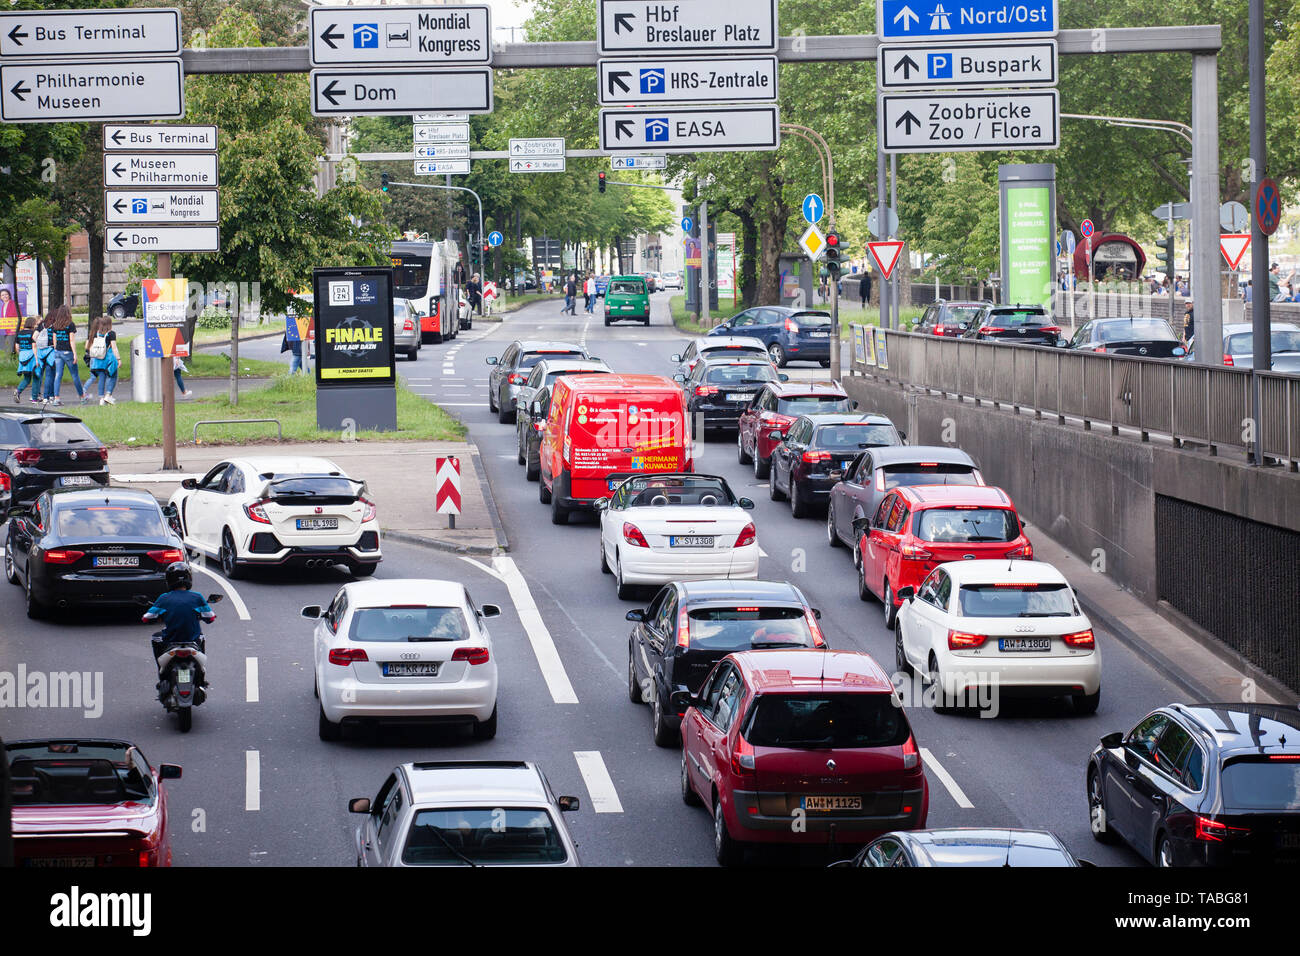 traffic jam on the Rheinufer street, exit from the Rheinufer tunnel heading north, Cologne, Germany.  Stau auf der Rheinuferstrasse, Ausfahrt aus dem  Stock Photo